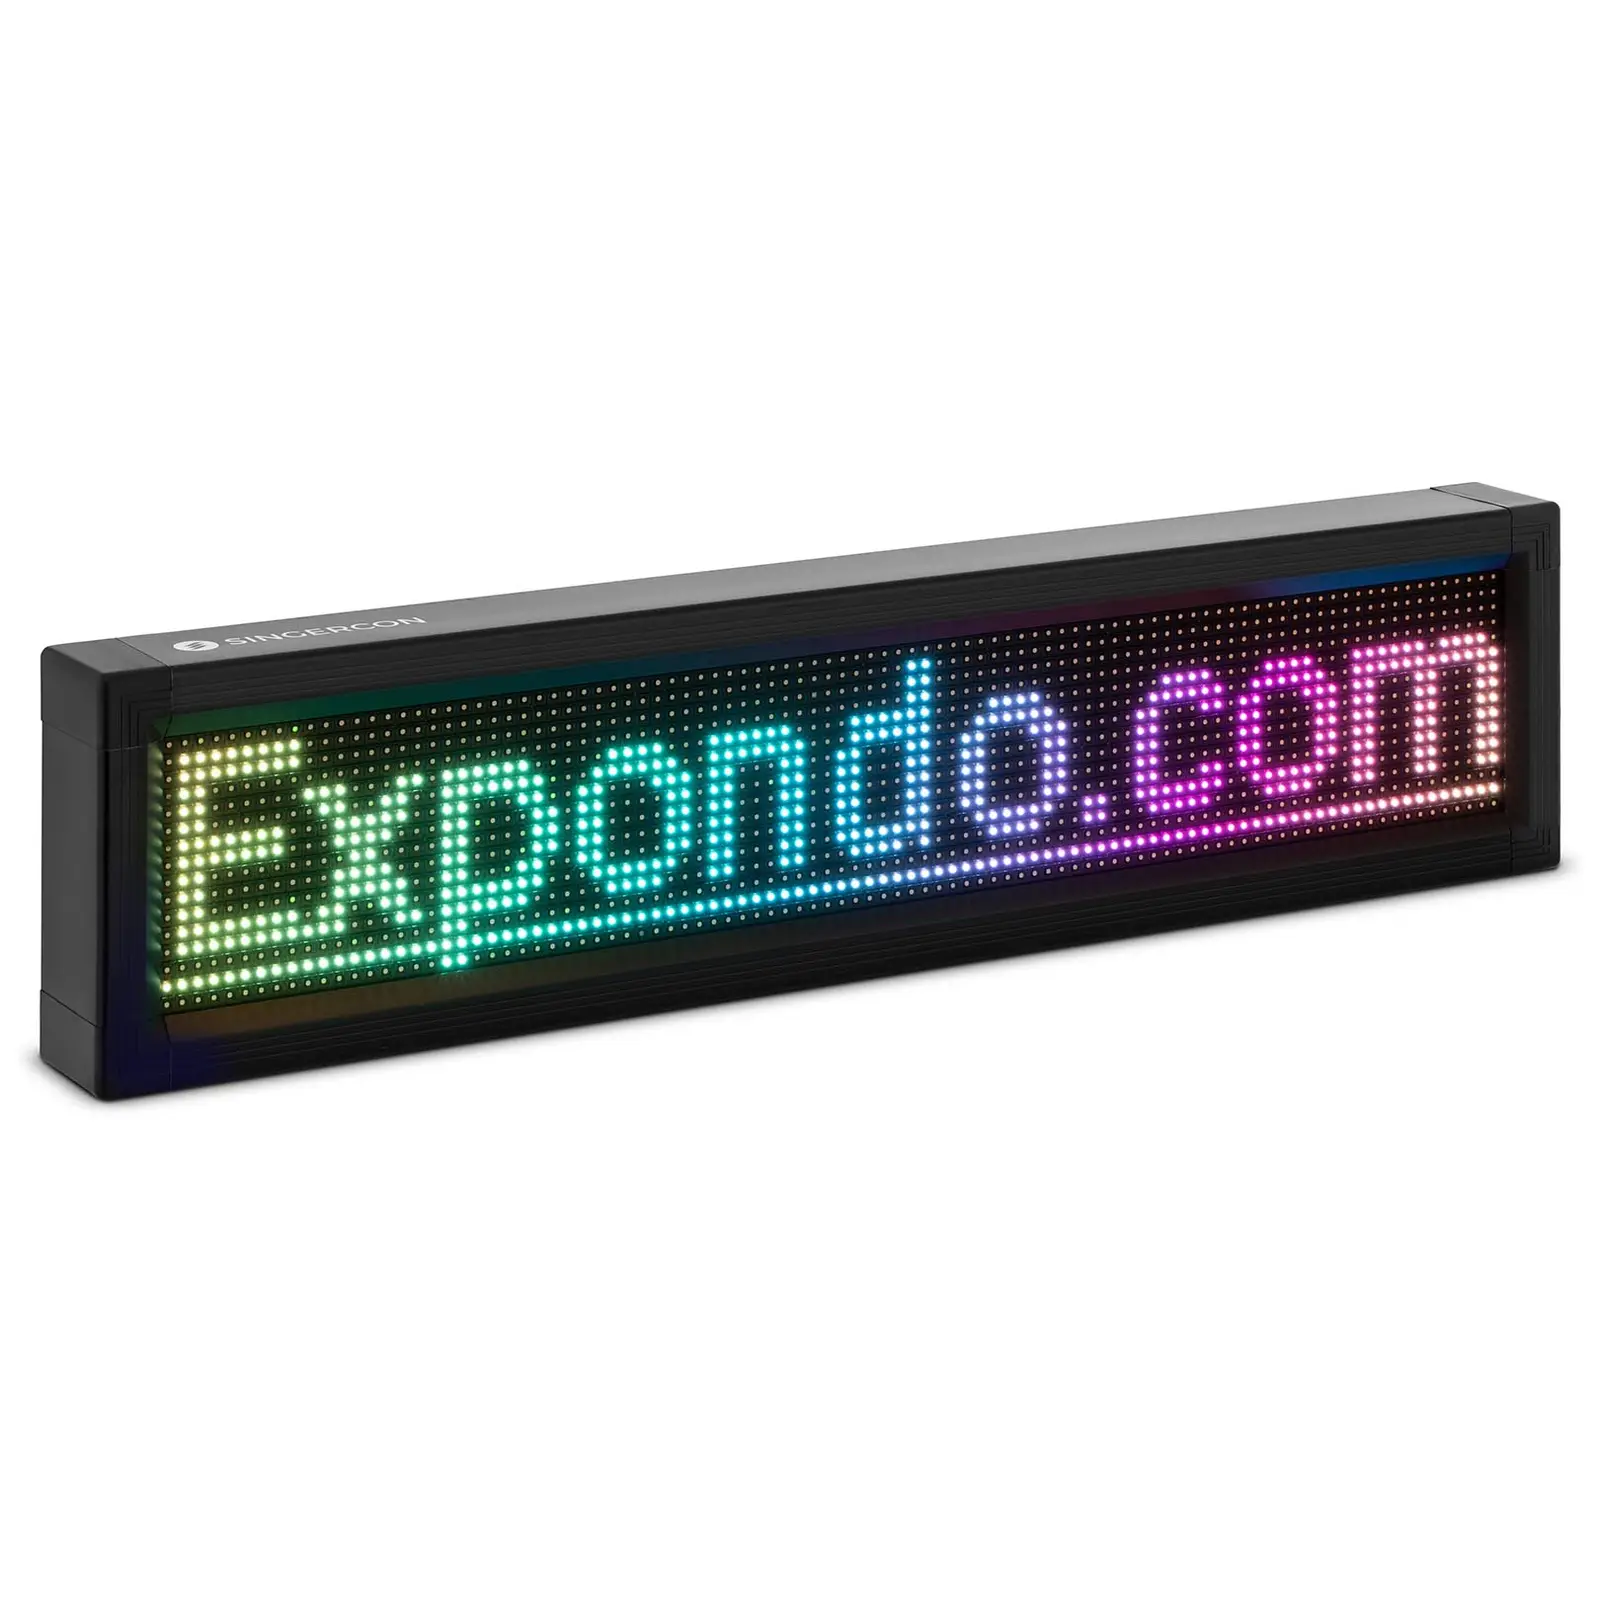 Ploča LED zaslona - 96 x 16 LED dioda u boji - 67 x 19 cm - programabilno putem iOS-a i Androida